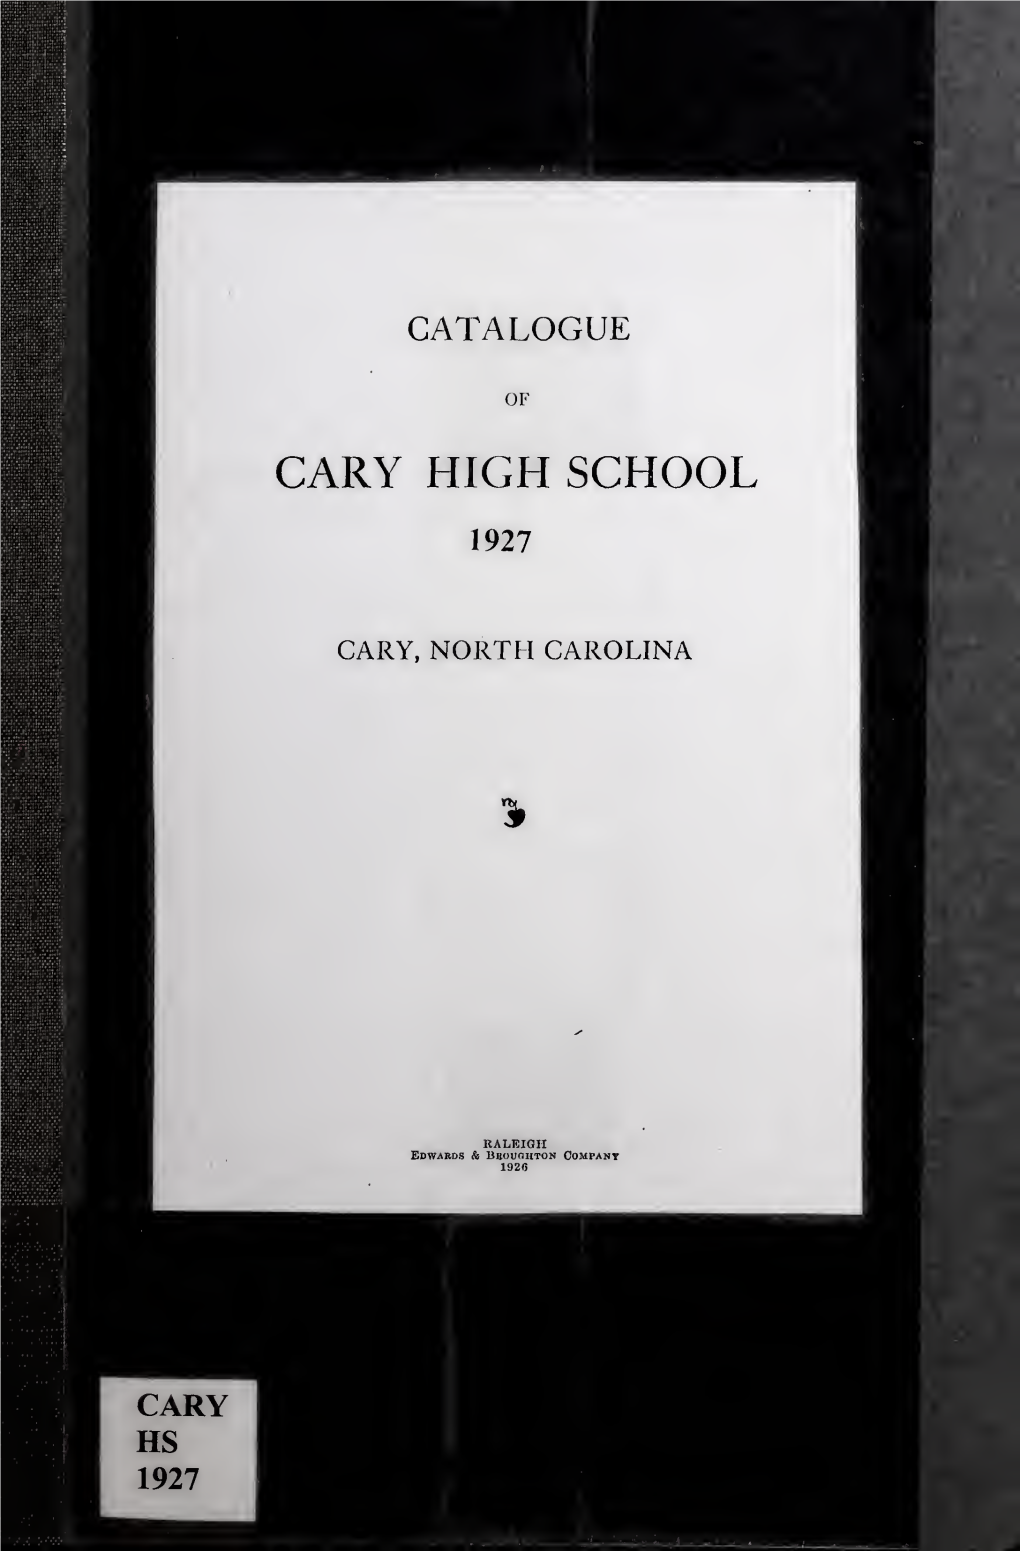 Cary High School Catalogue, 1927